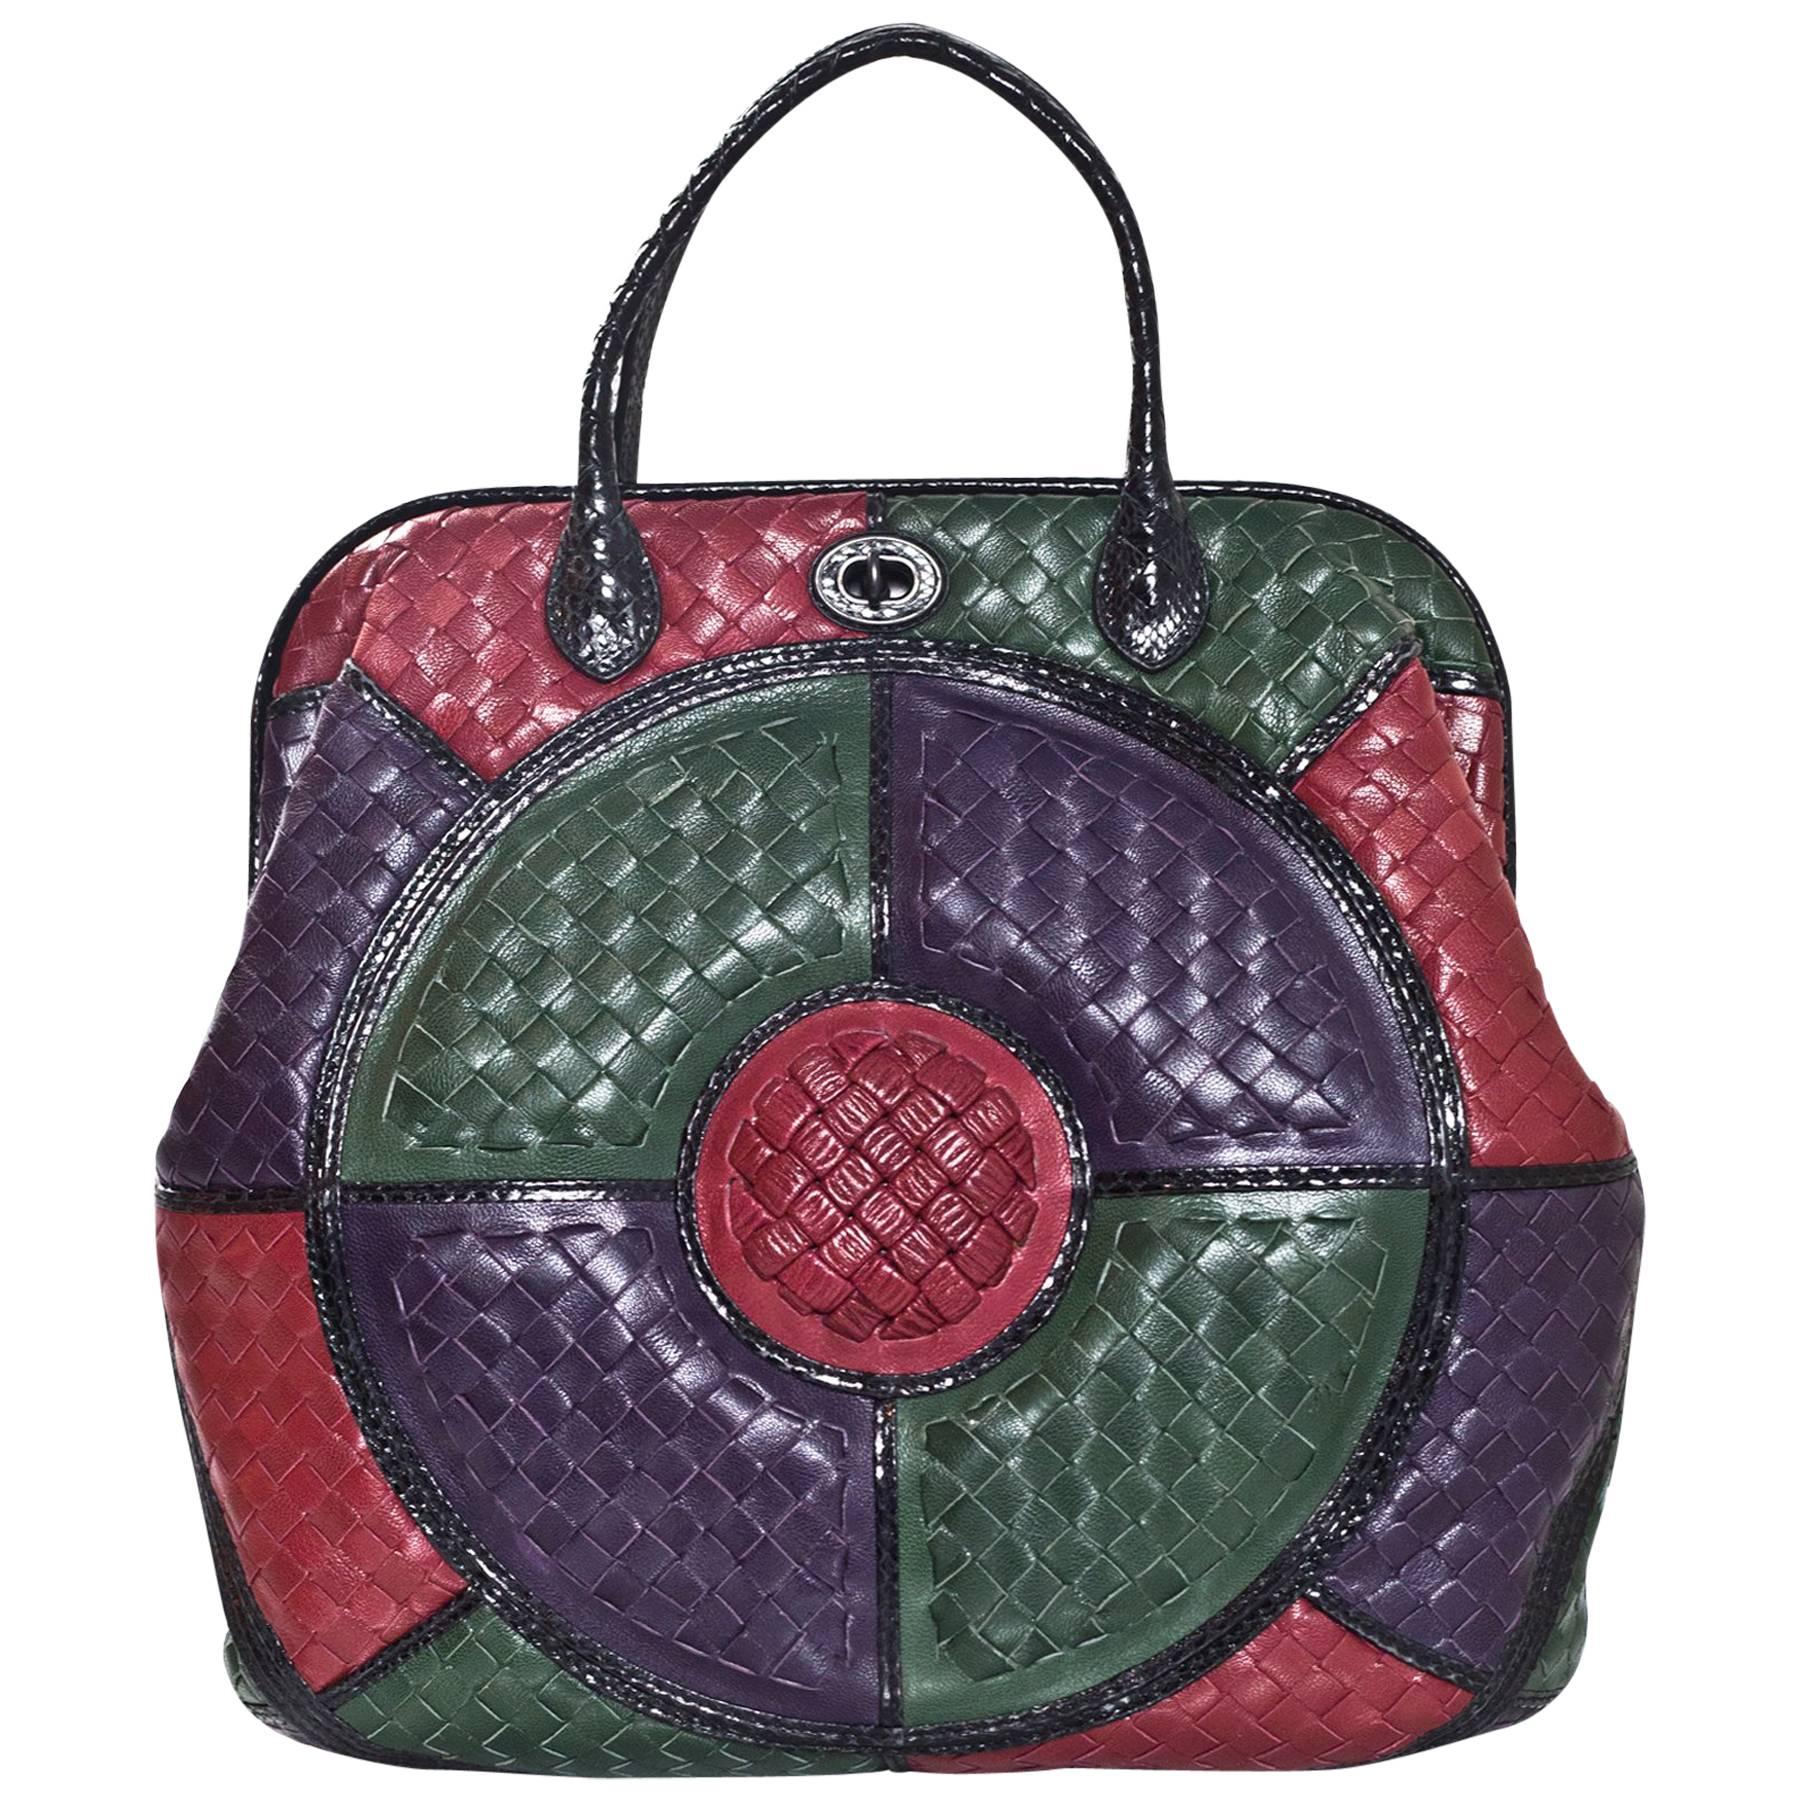 Bottega Veneta Tri-Color Woven Leather Limited Edition Intrecciato Frame Bag